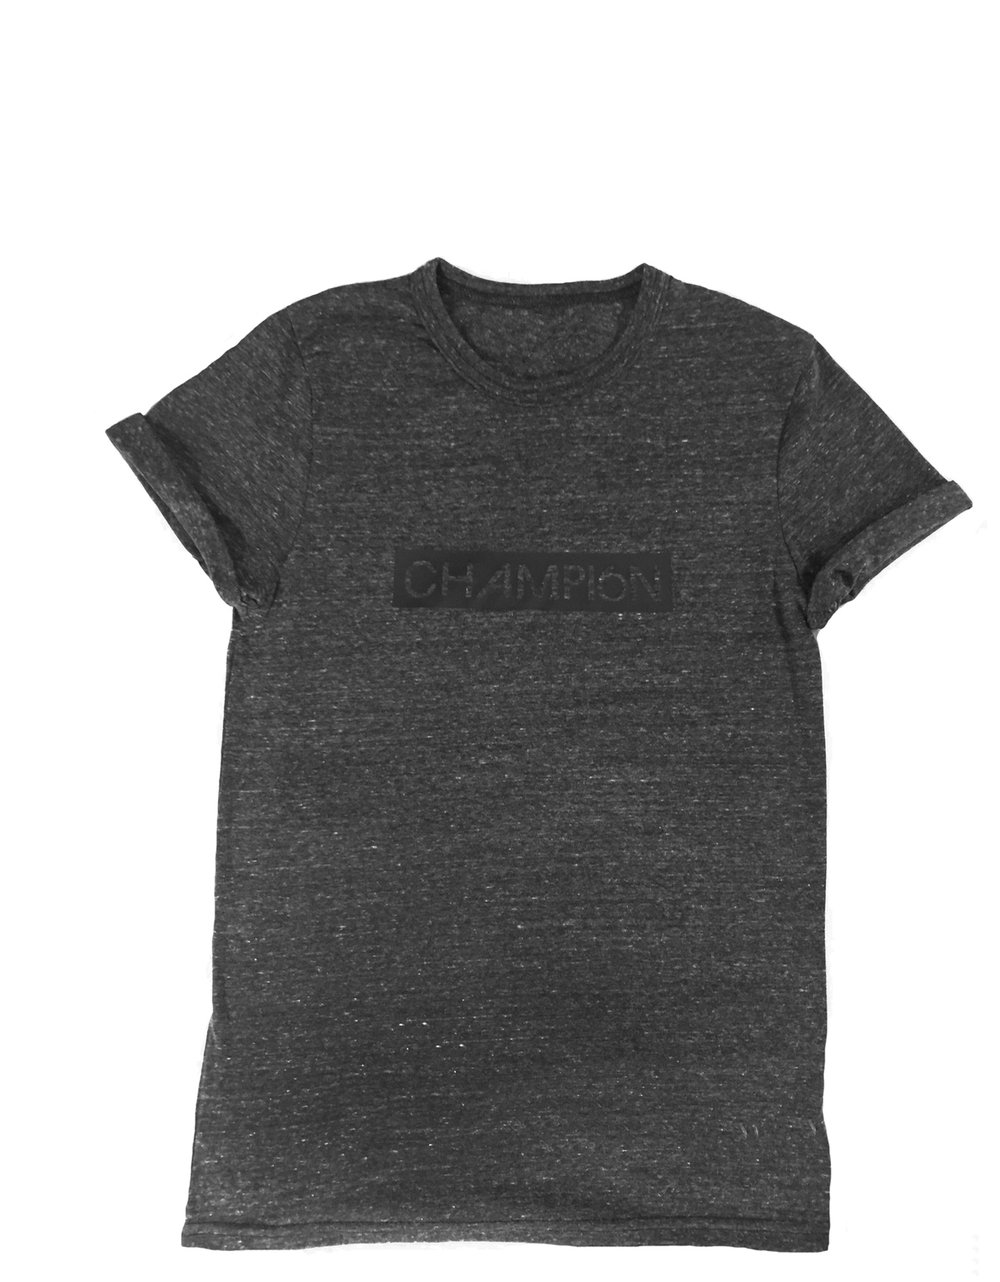 Image of unisex recycled block t-shirt